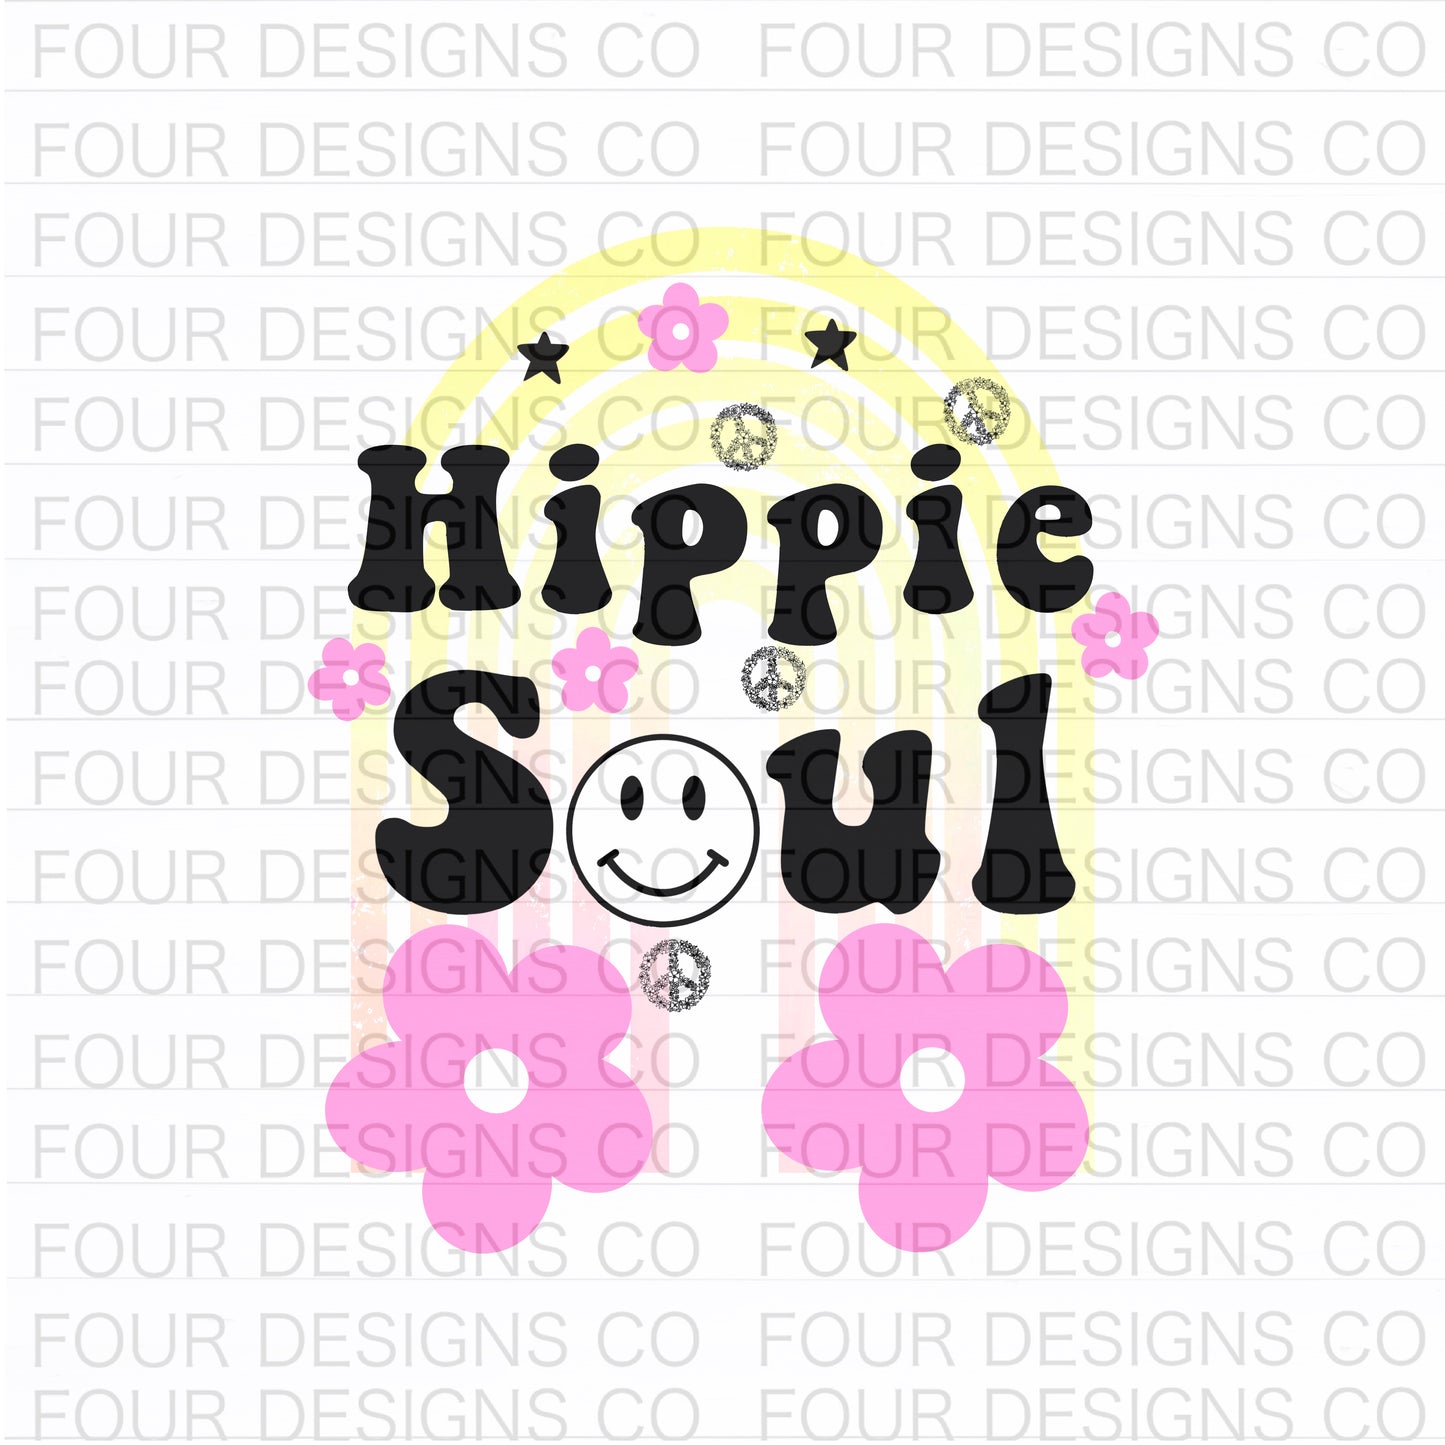 Hippie soul